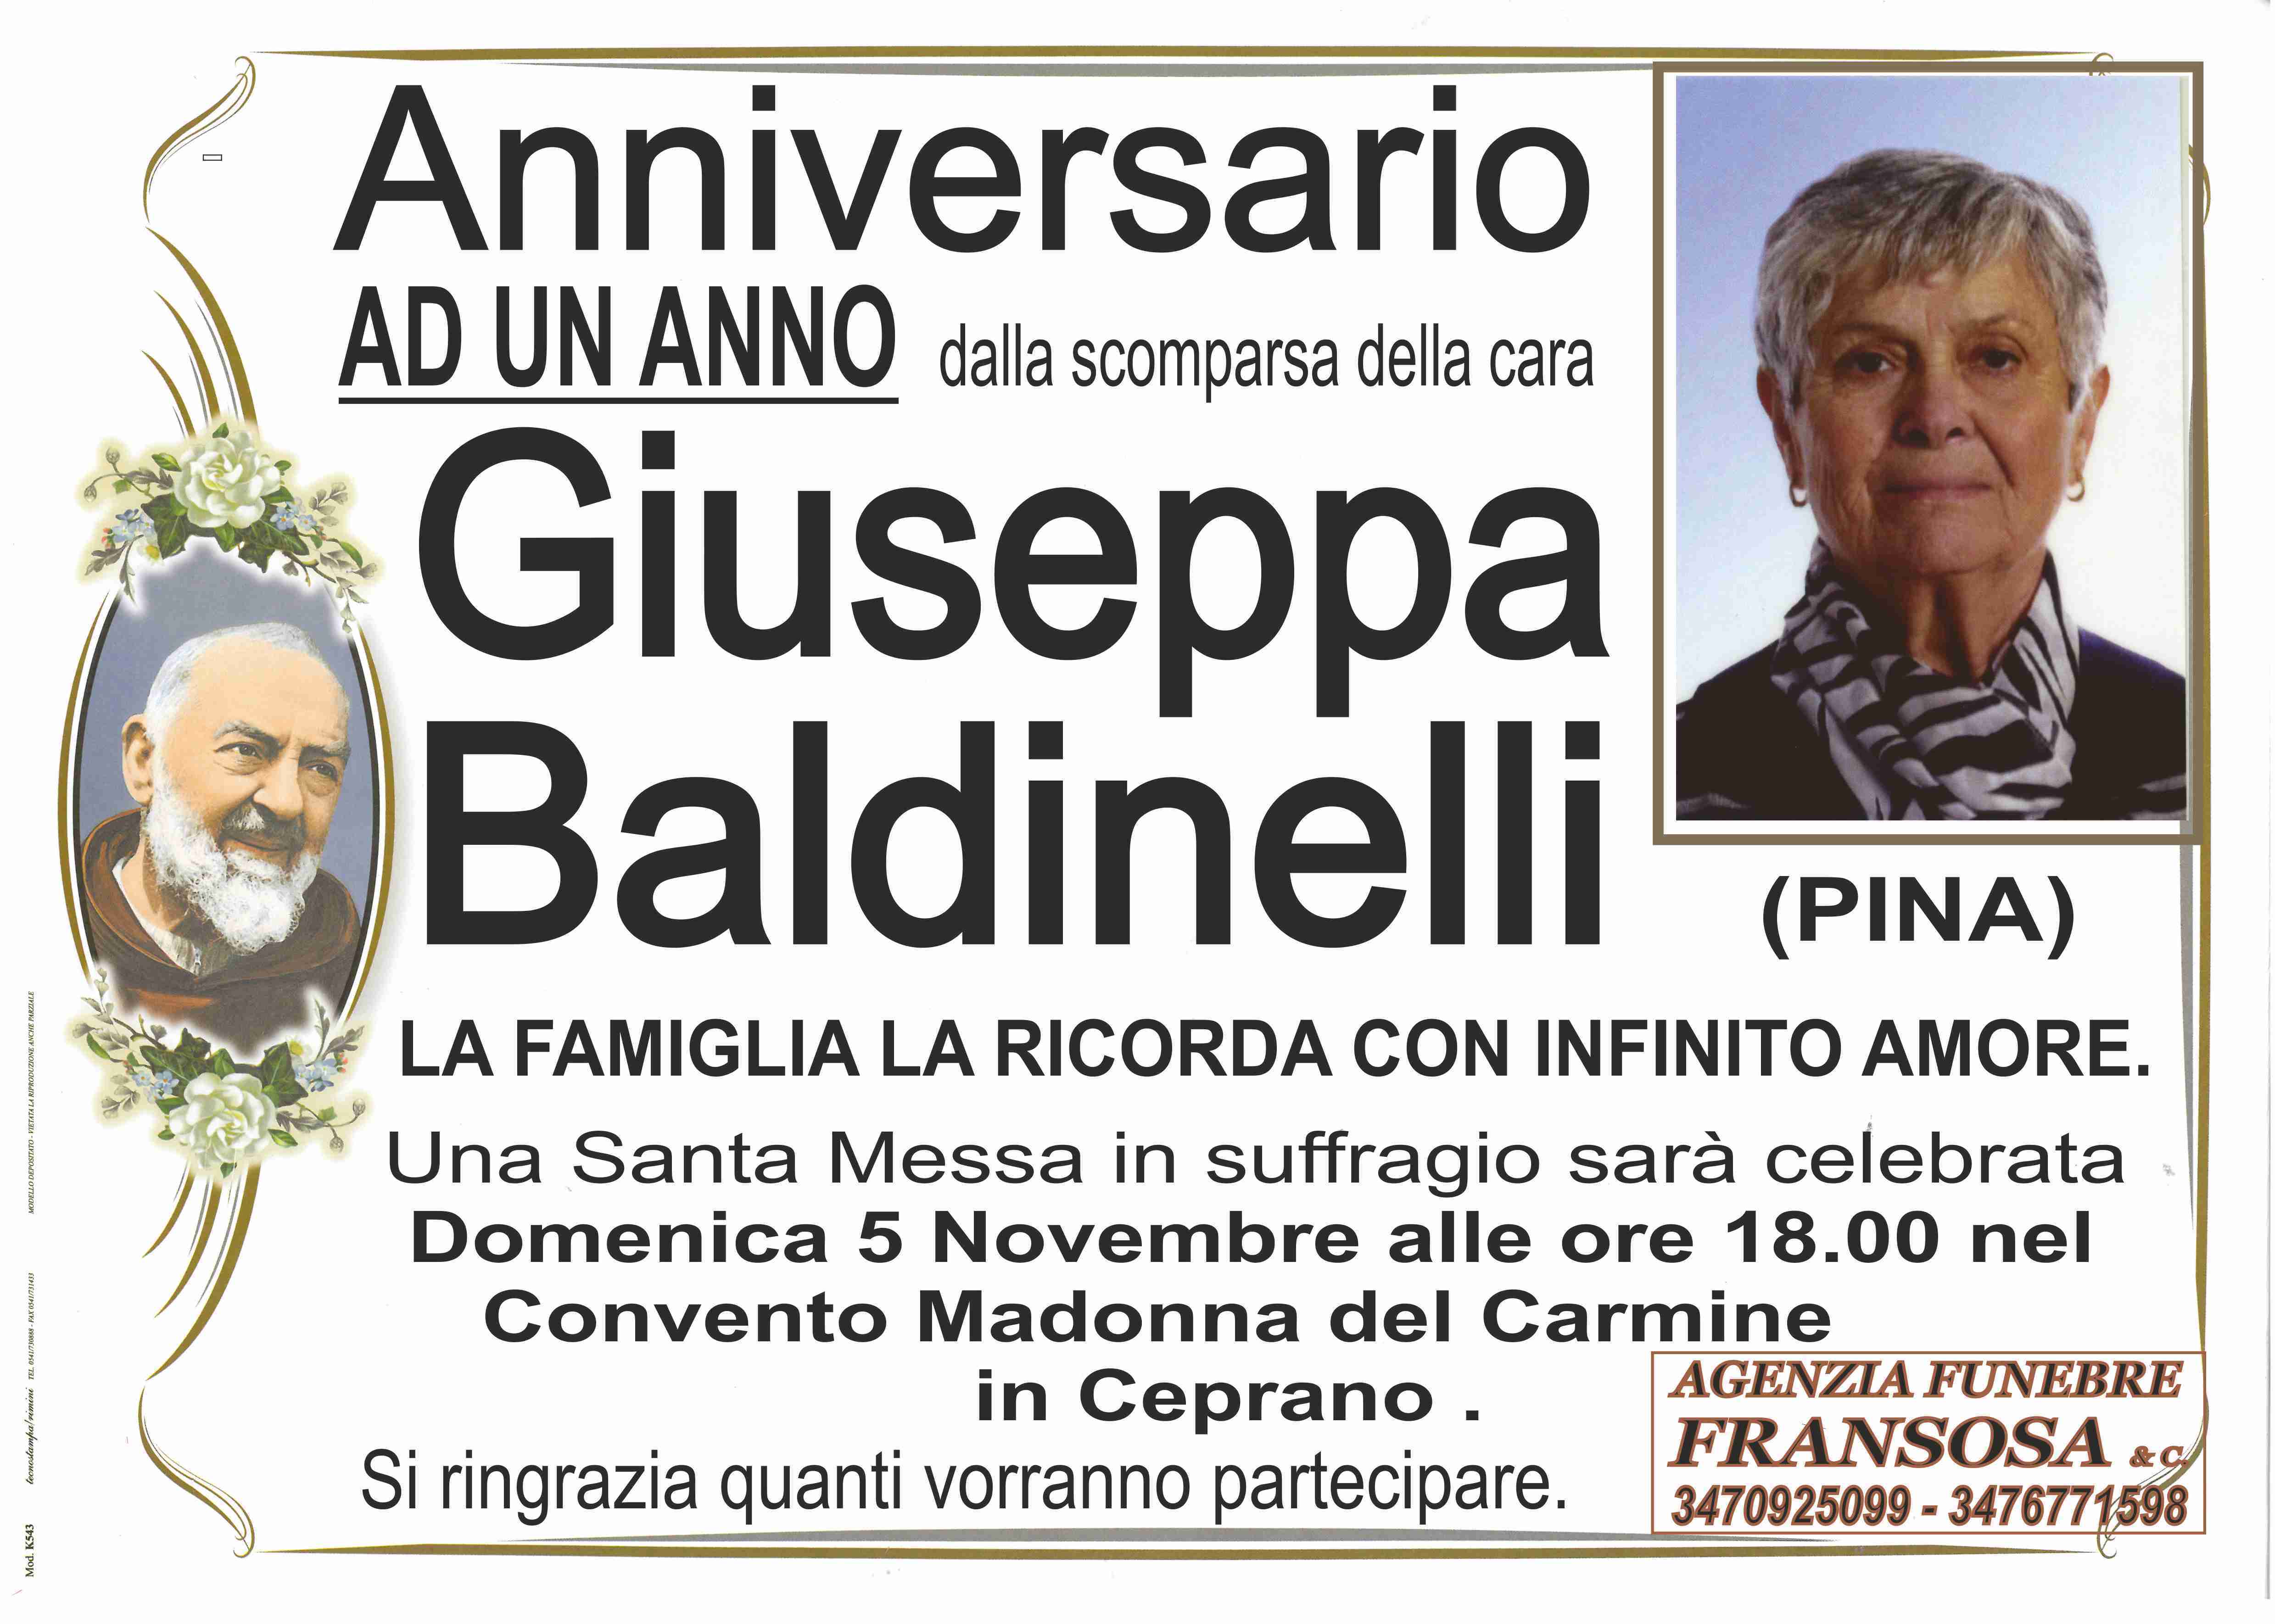 Giuseppa Baldinelli